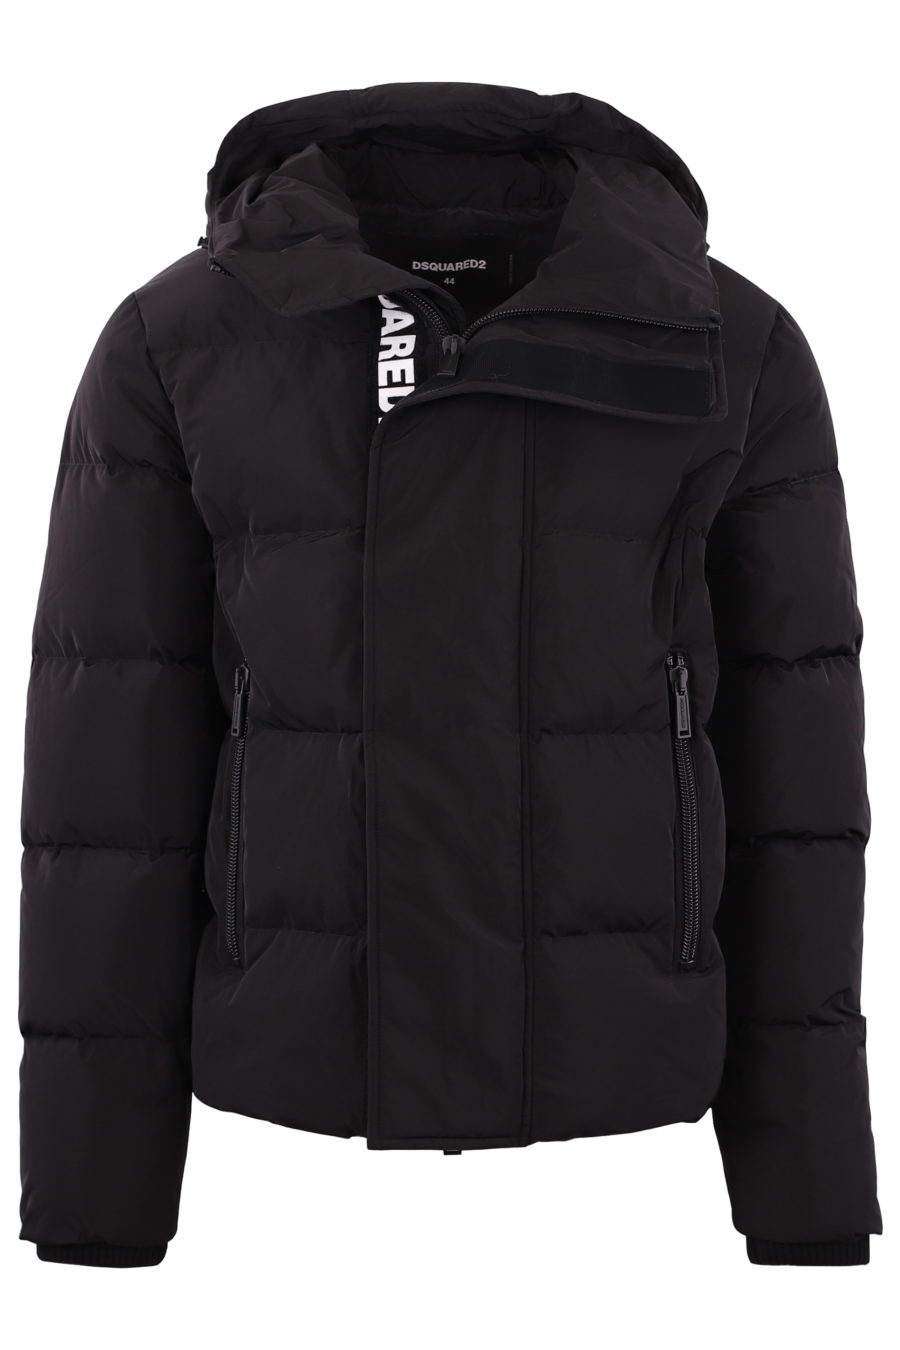 Black jacket with white logo on the zip - IMG 7225